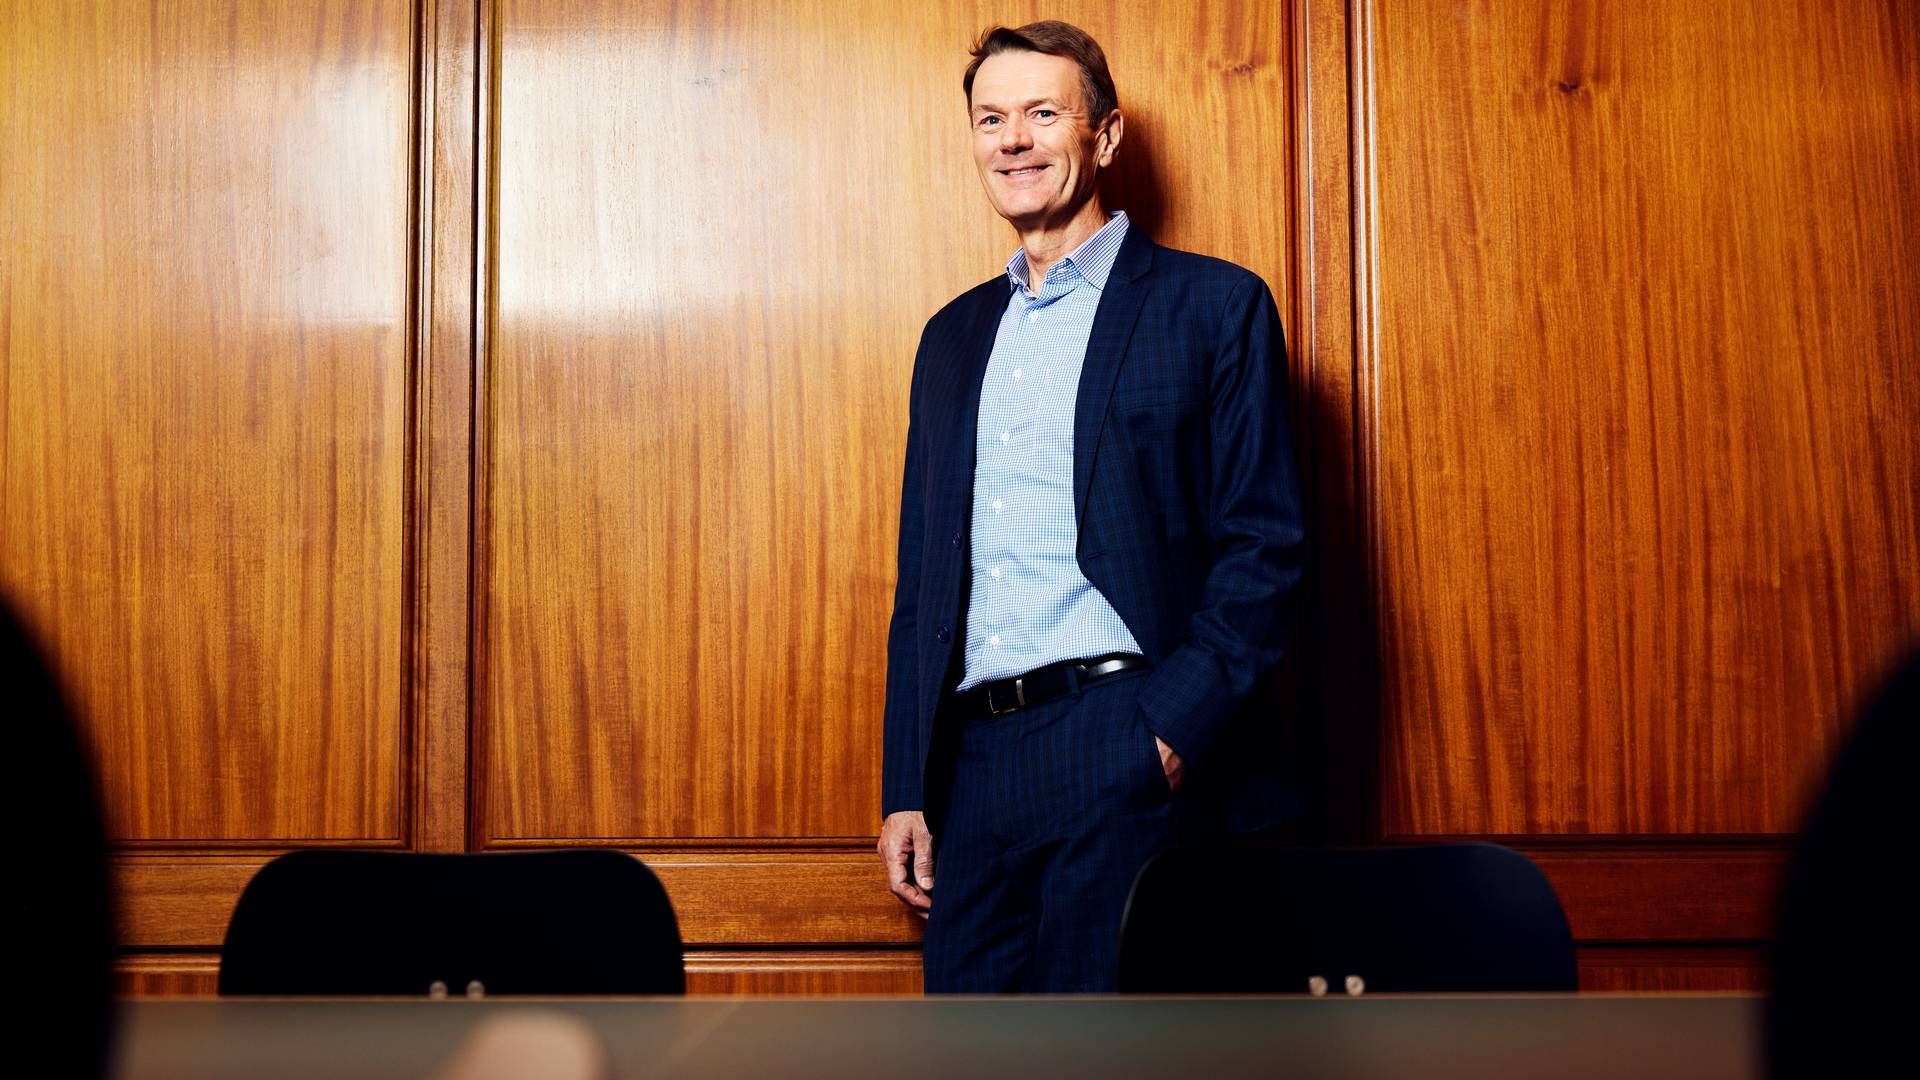 CEO at BankInvest Lars Bo Bertram. | Photo: Pr/bankinvest